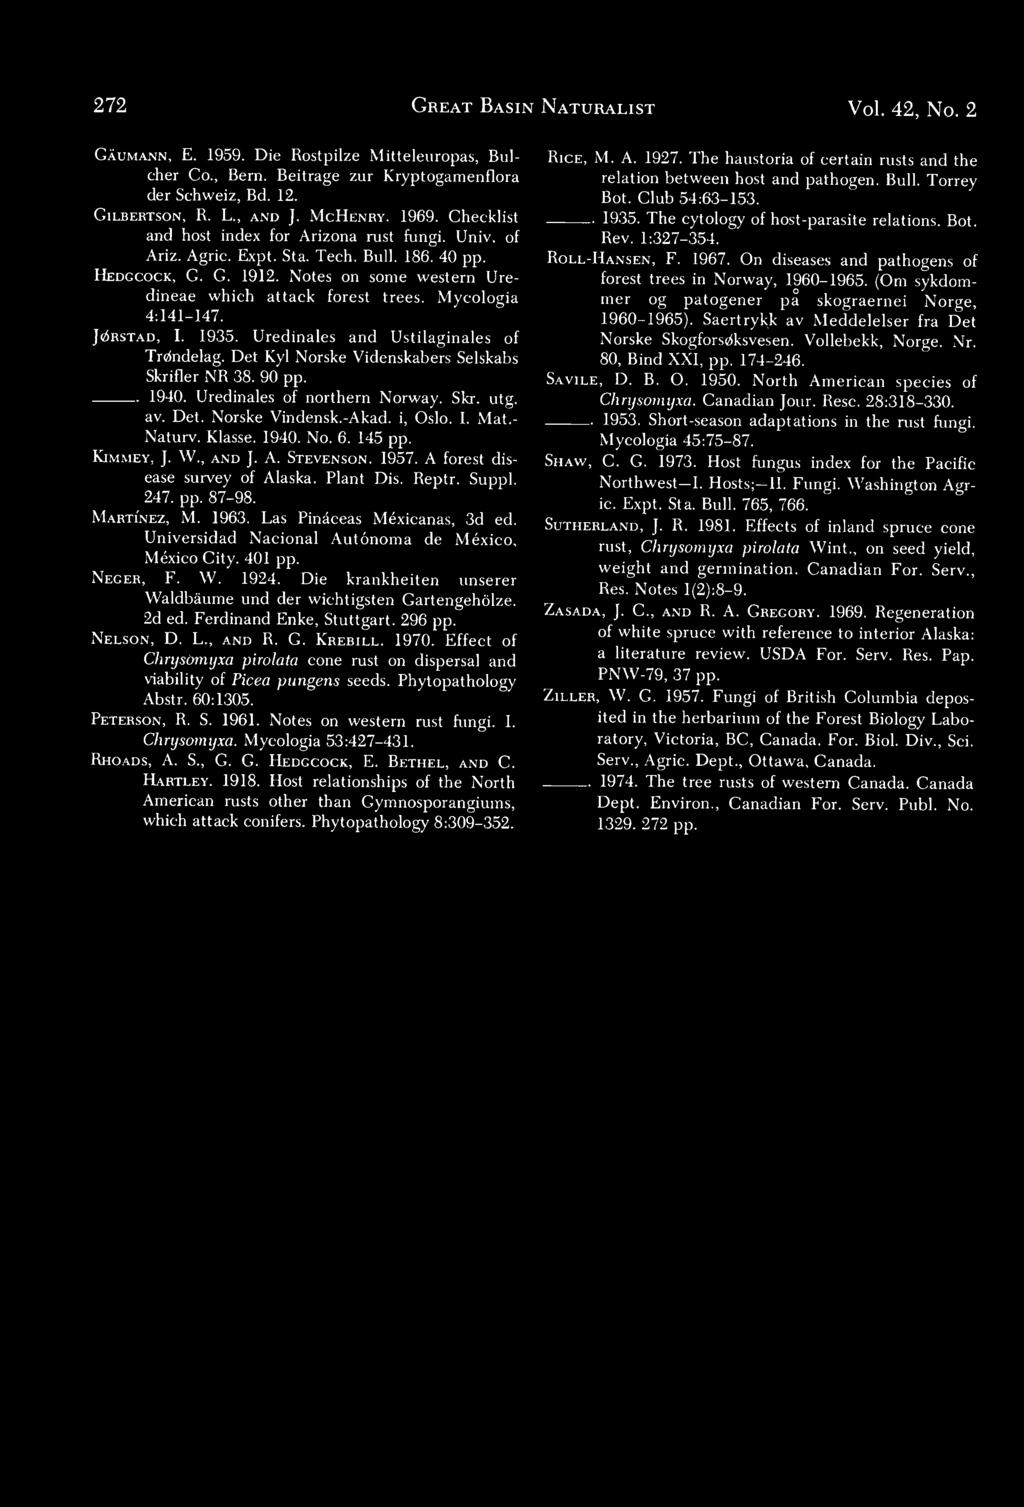 Las Pinaceas Mexicanas, 3d ed. Universidad Nacional Autonoma de Mexico, Mexico City. 401 pp. Neger, F. W. 1924. Die krankheiten unserer Waldbaume und der wichtigsten Gartengeholze. 2d ed.